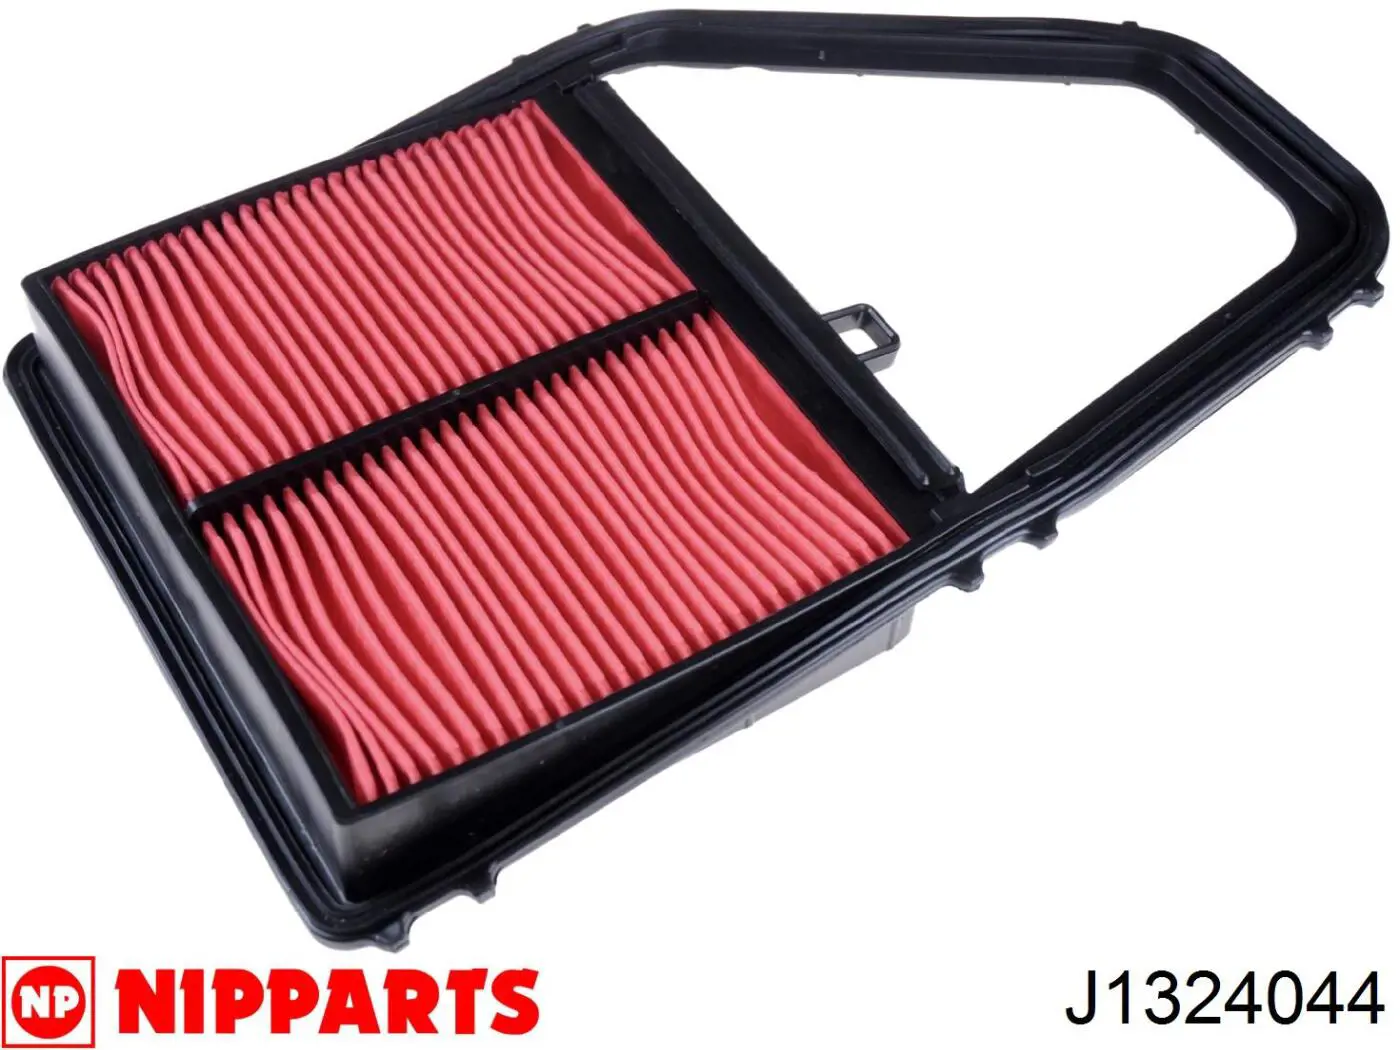 J1324044 Nipparts filtro de aire